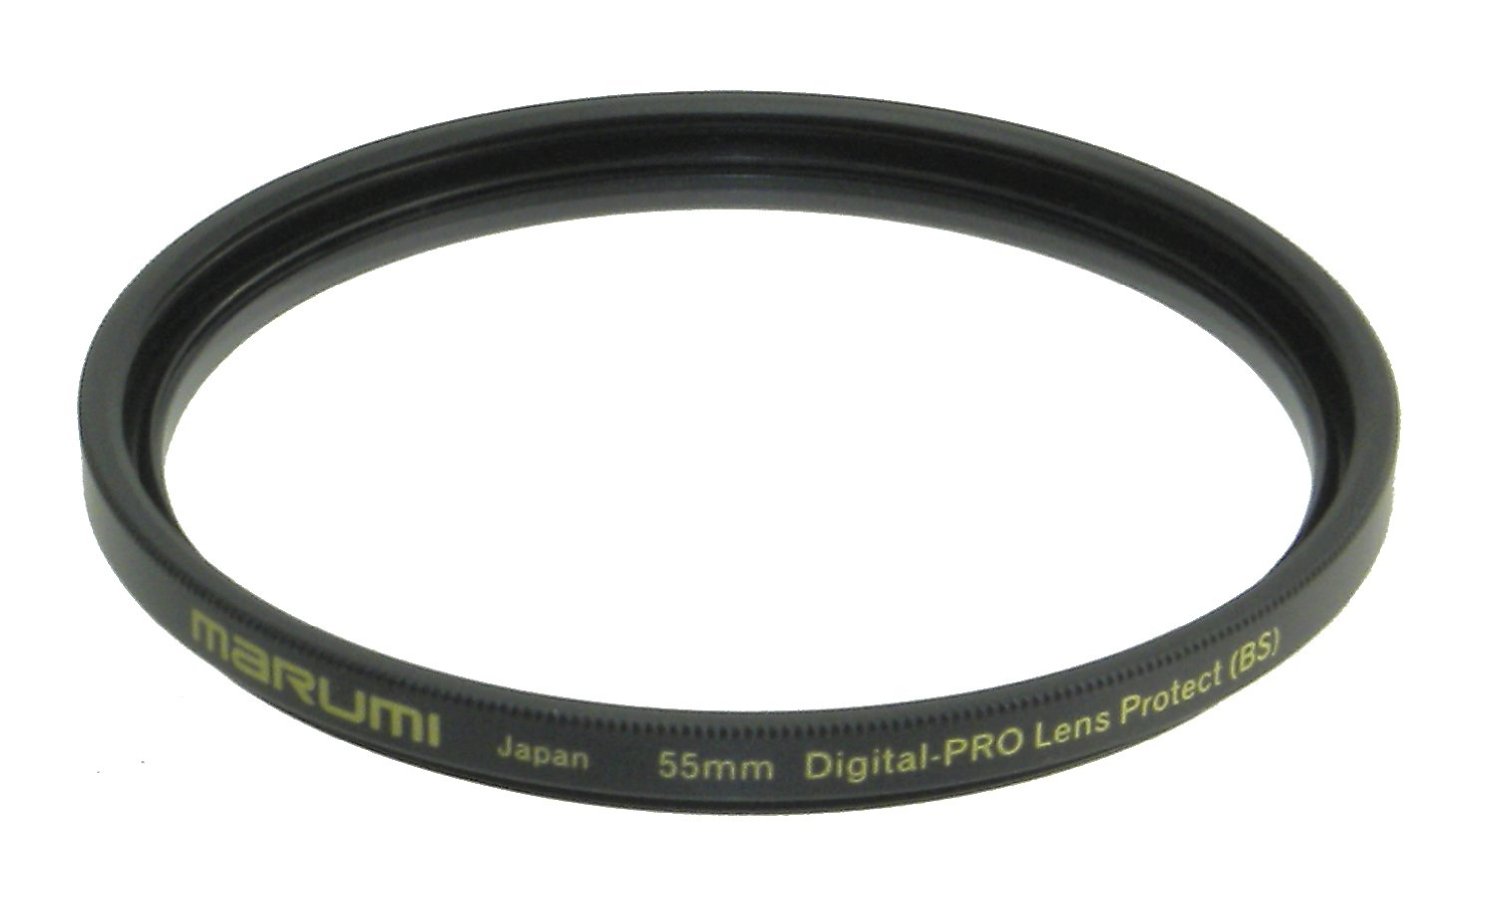 Digital Pro Lens Protect Brass - Marumi - Marumi  <br> <br>